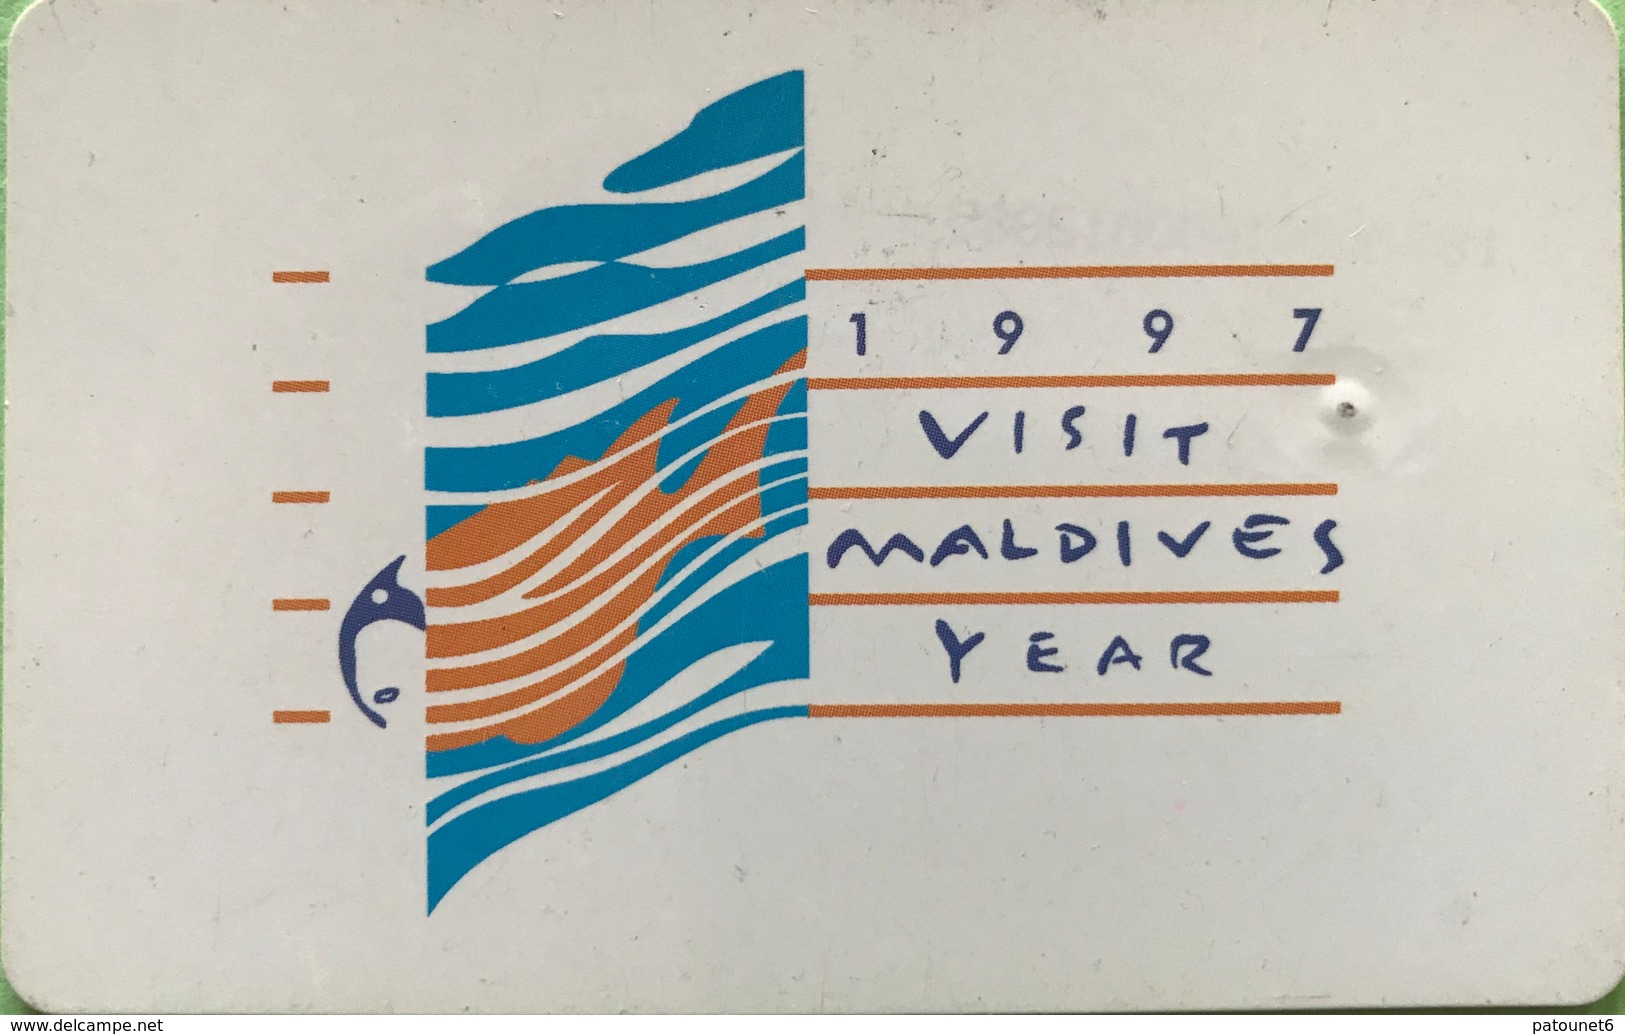 MALDIVES  -  Phonecard  -  DHIRAAGU  -  Save The Turtle  -  Rf 30 - Maldiven